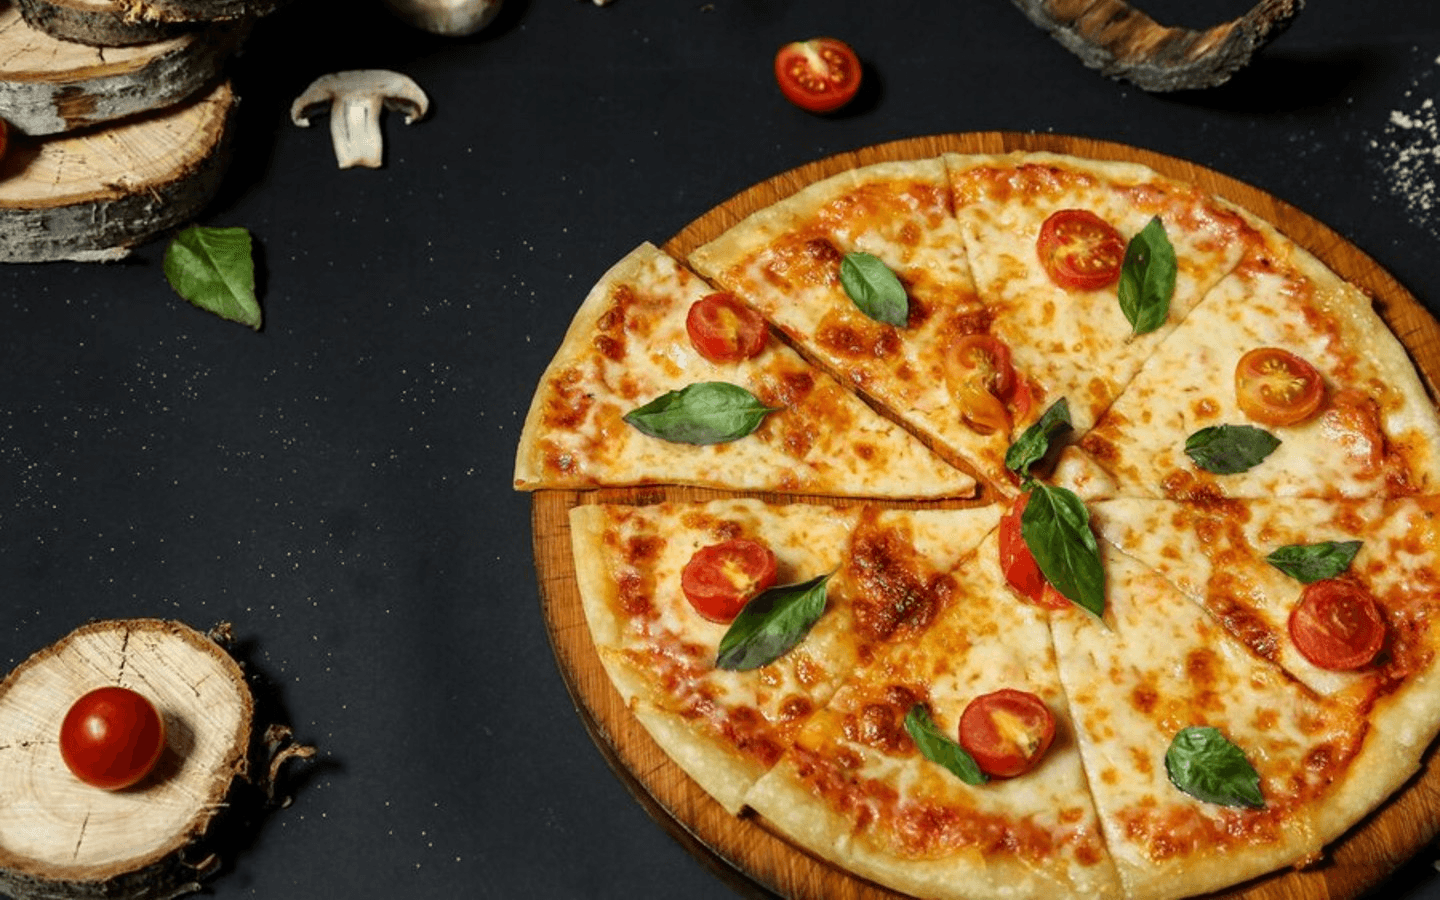 Roma's Pizza, Pasta, Subs Rewards